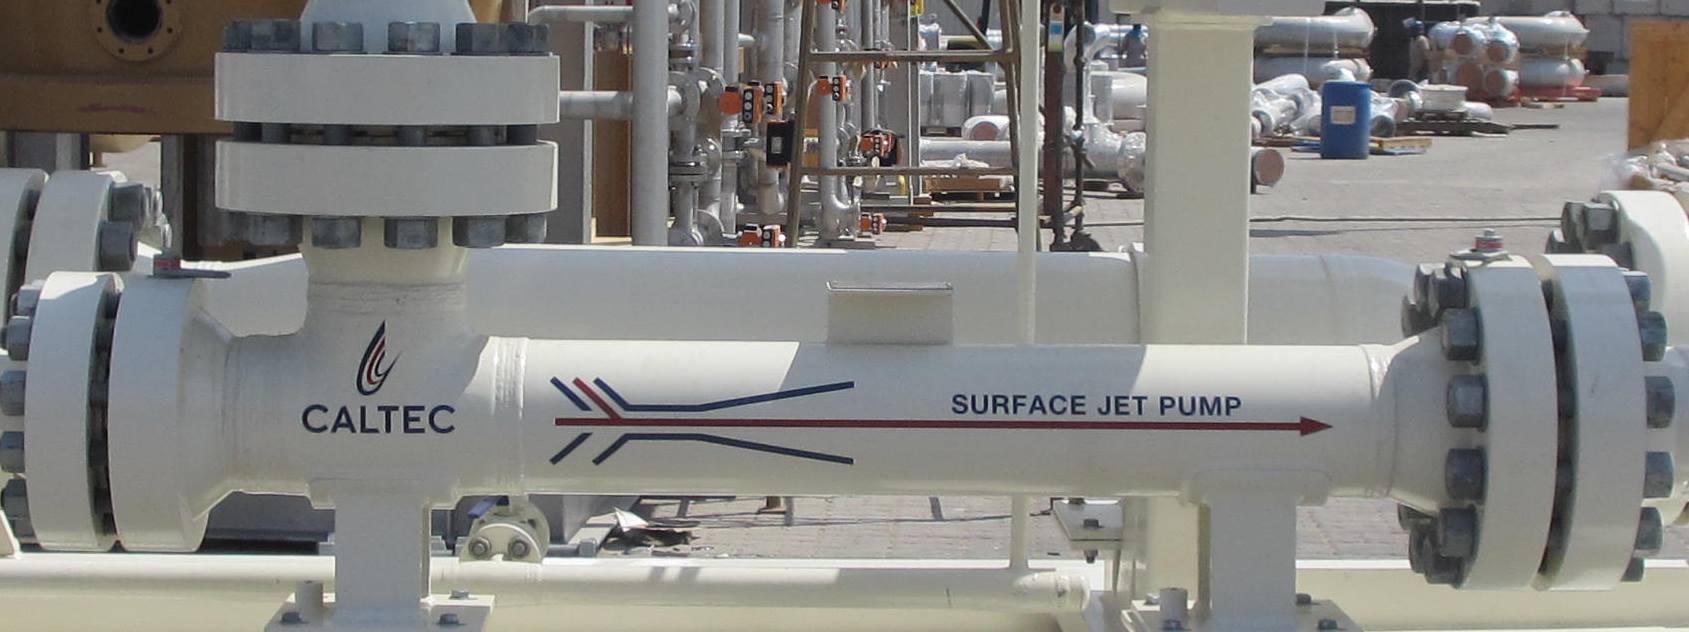 Caltec Surface Jet Pump